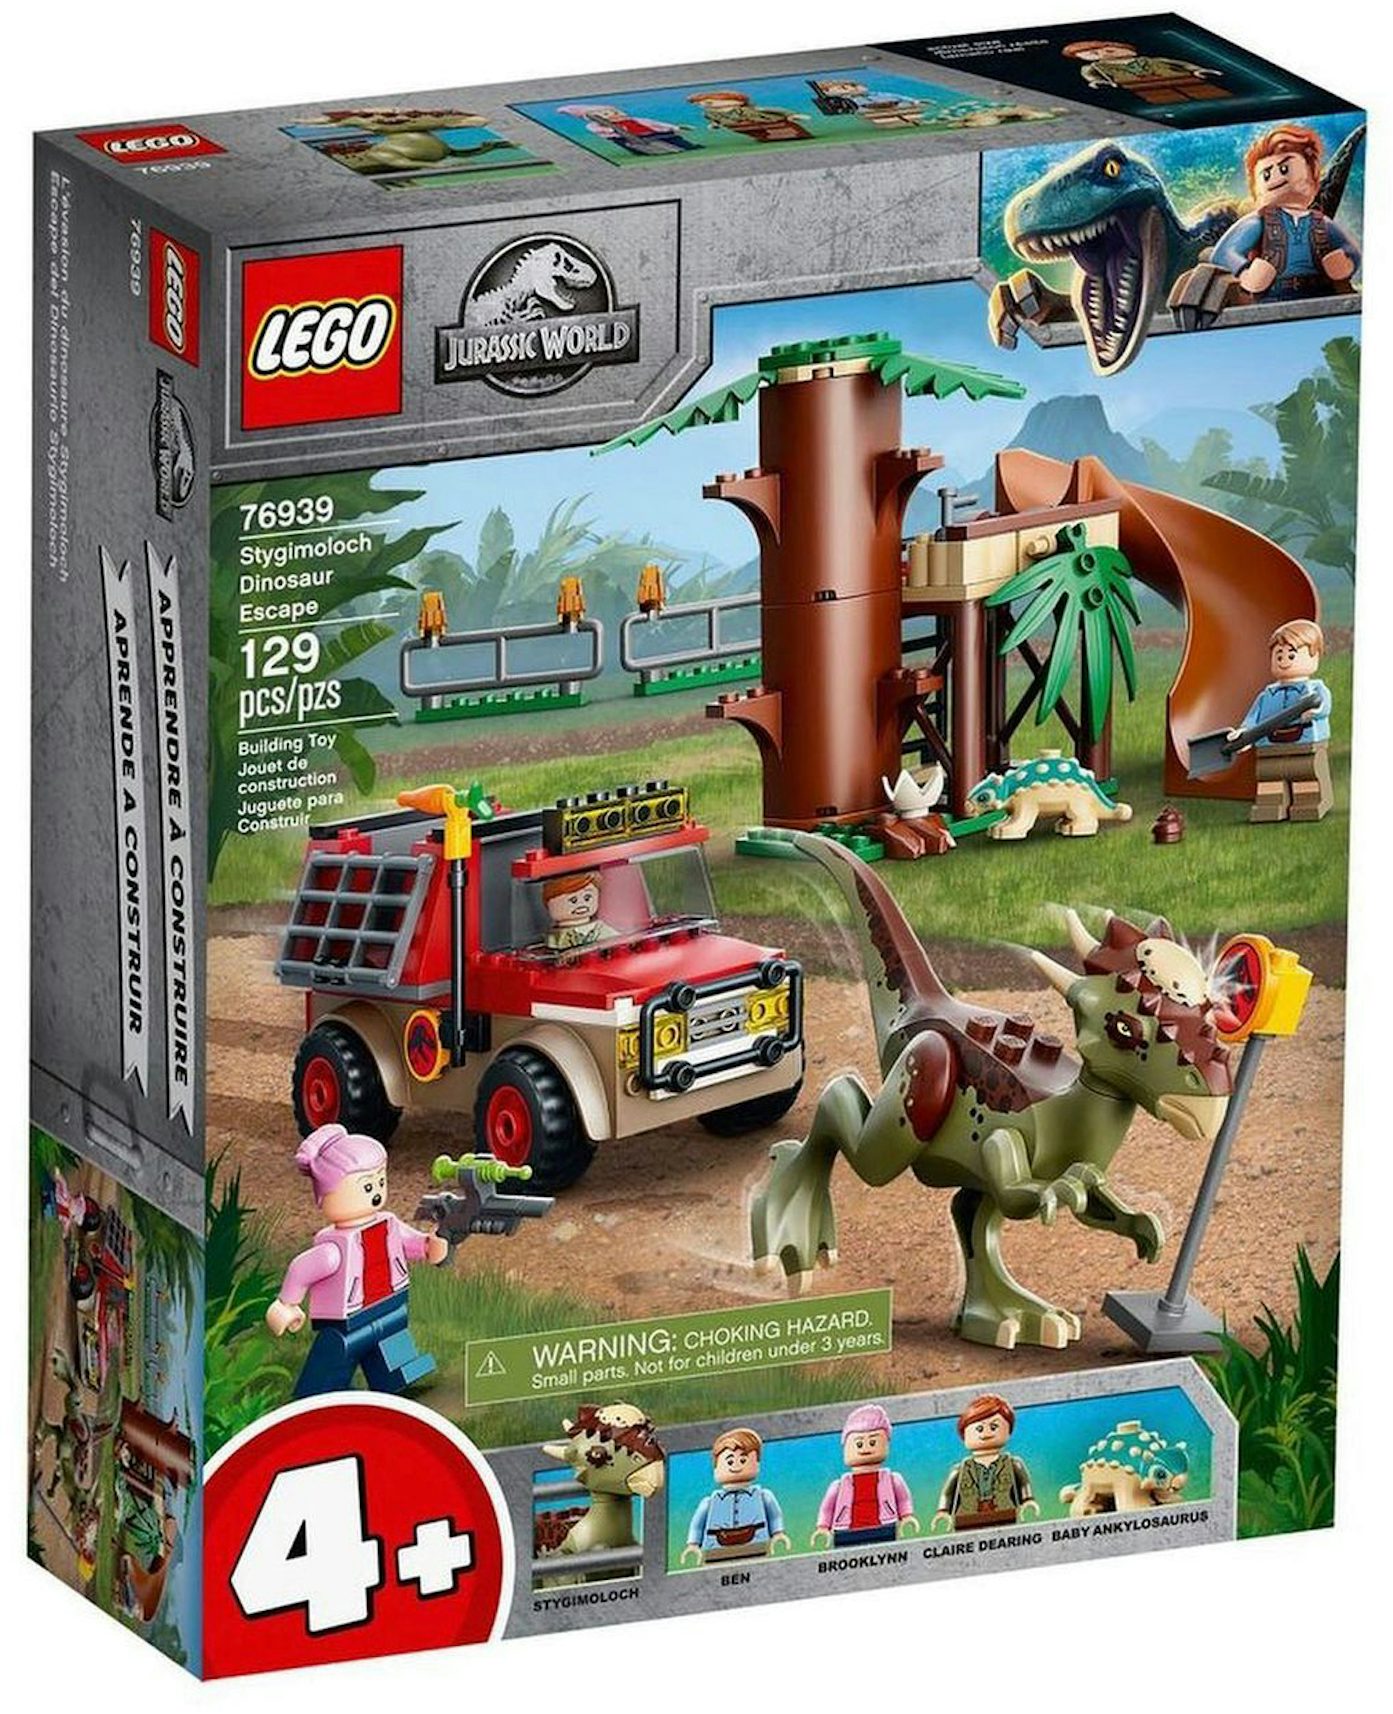 https://images.stockx.com/images/LEGO-Jurassic-World-Stygimoloch-Dinosaur-Escape-Set-76939.jpg?fit=fill&bg=FFFFFF&w=1200&h=857&fm=jpg&auto=compress&dpr=2&trim=color&updated_at=1623430486&q=60